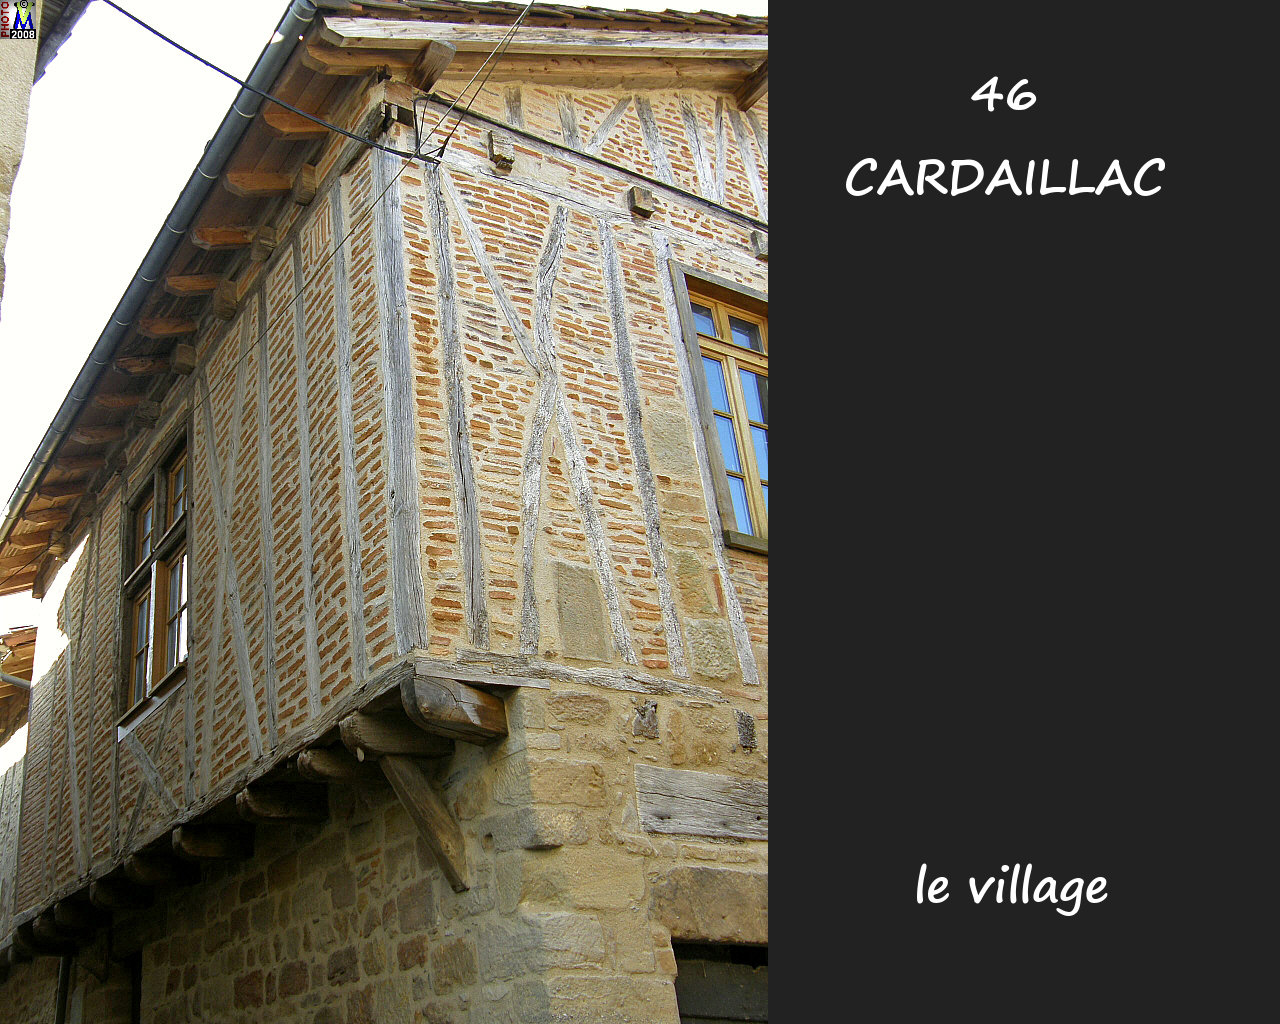 46CARDAILLAC_village_216.jpg